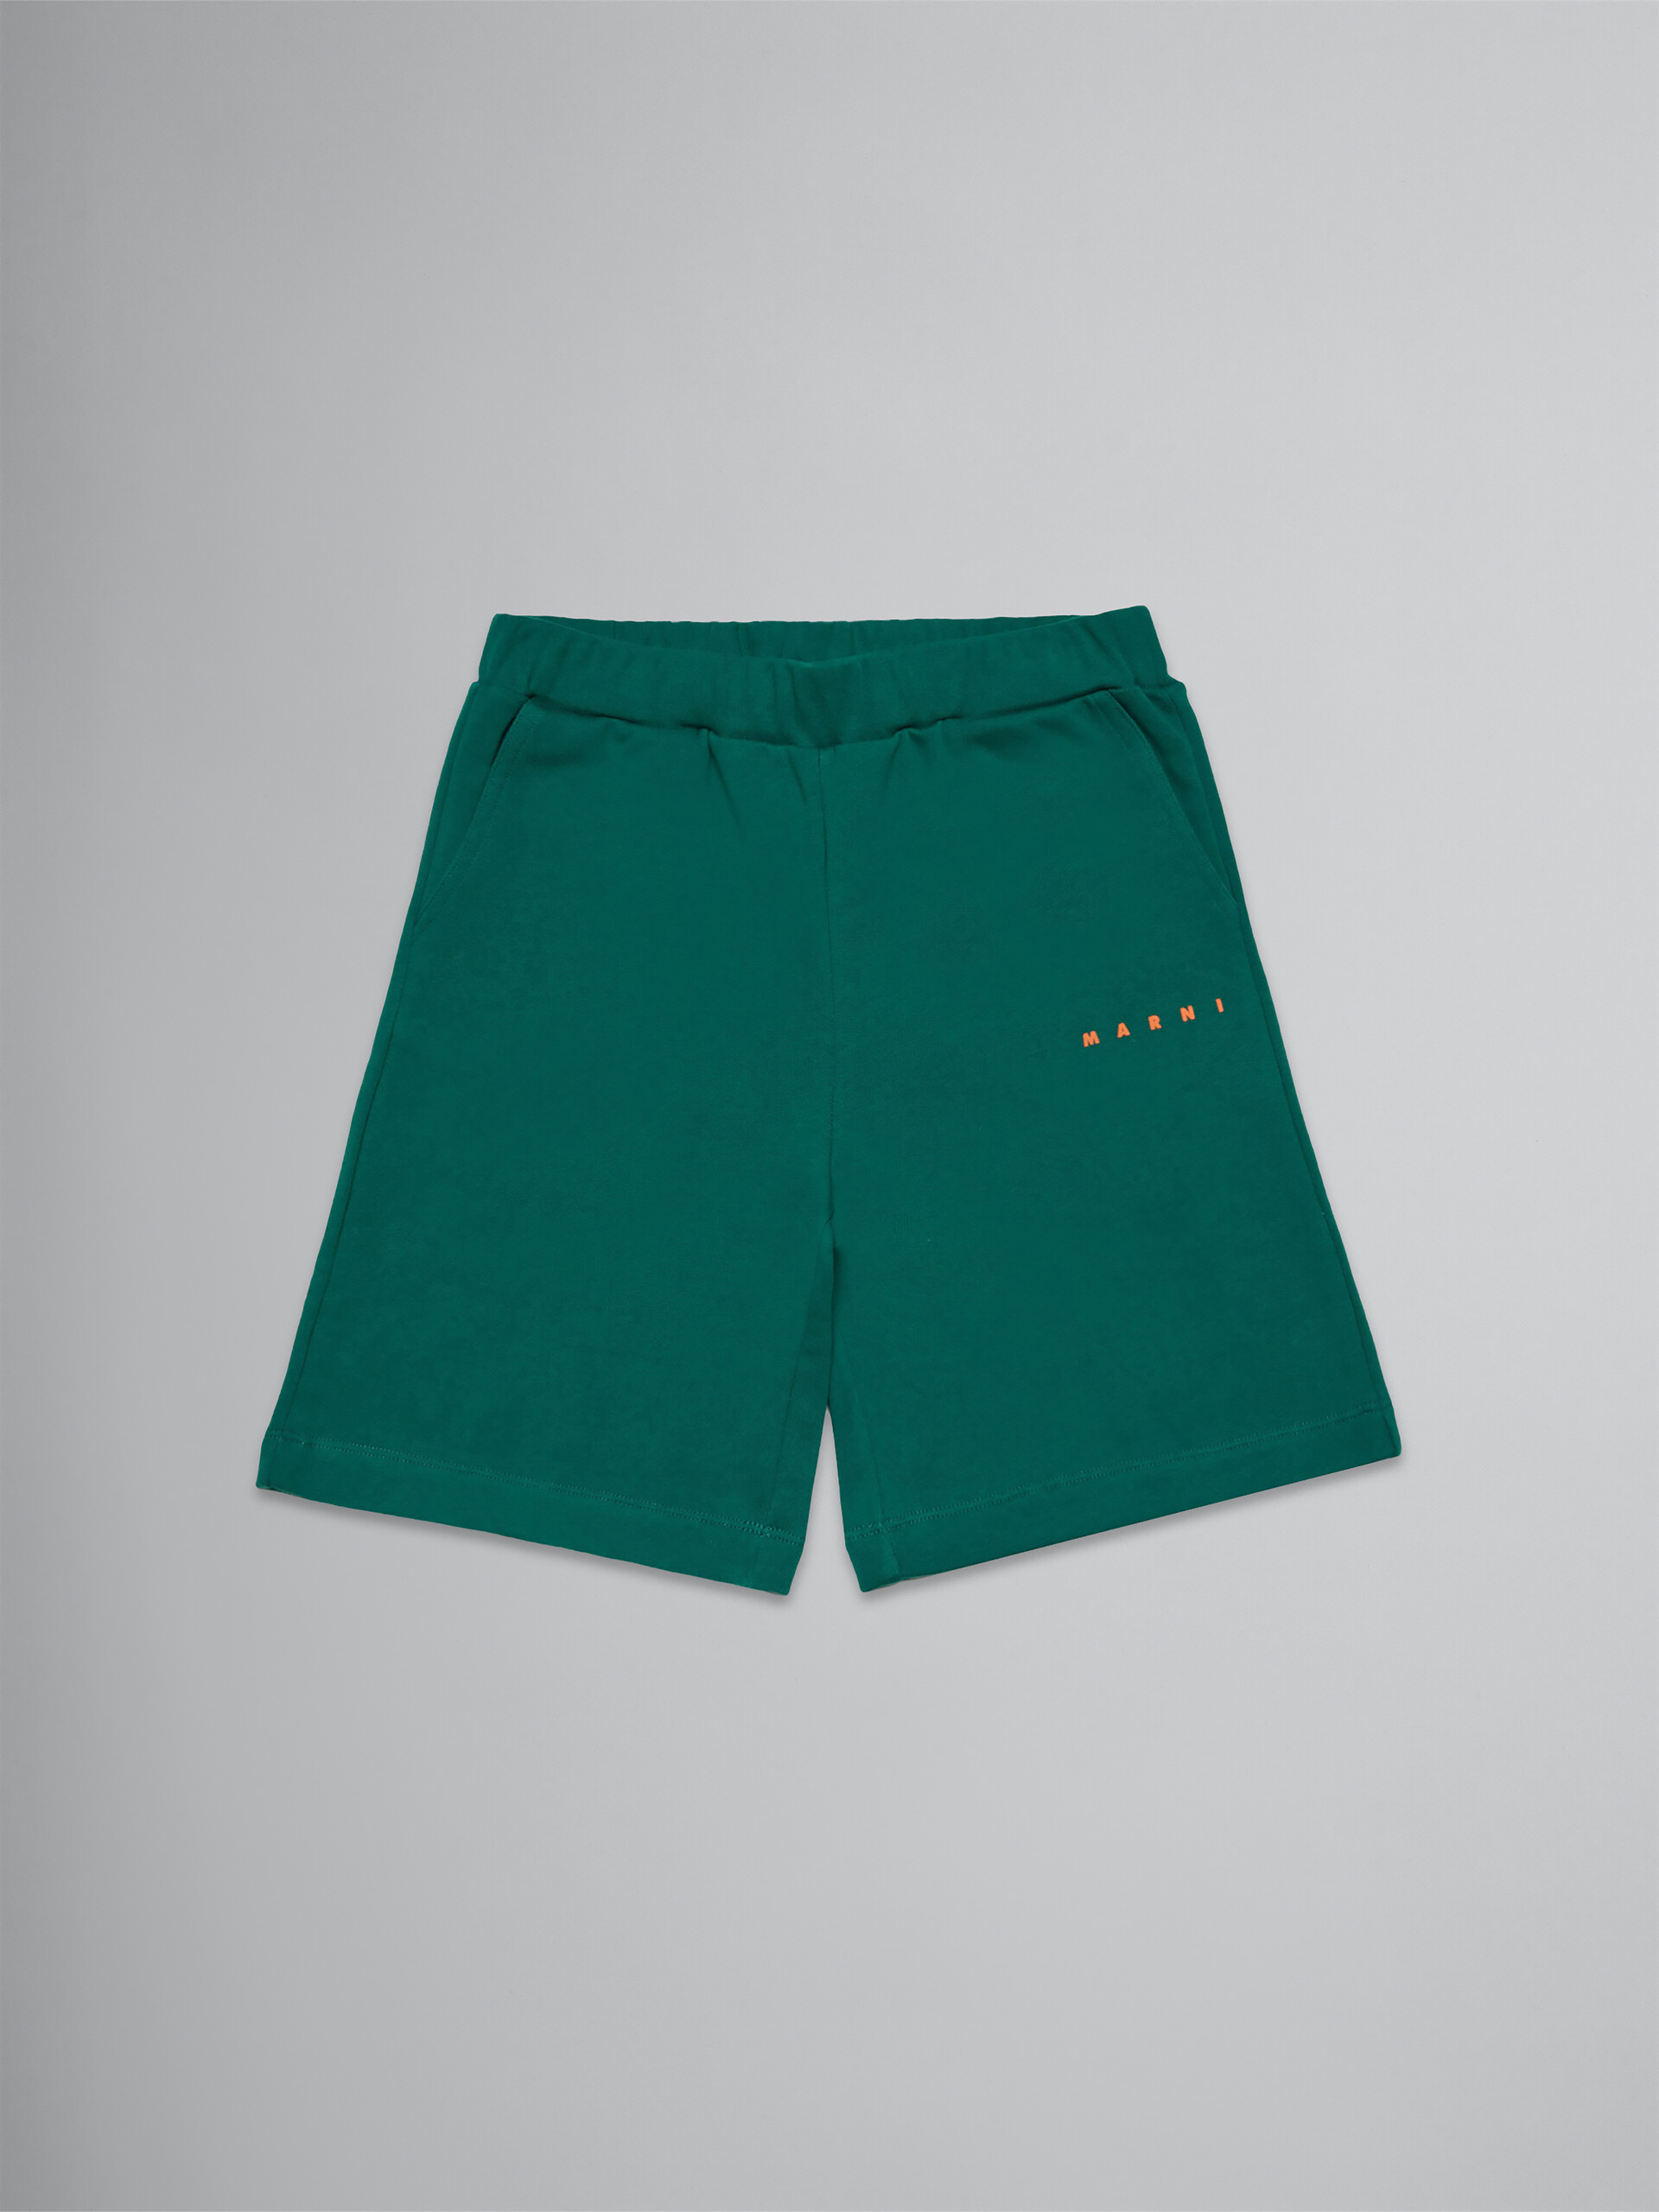 Green fleece shorts with logo - Pants - Image 1